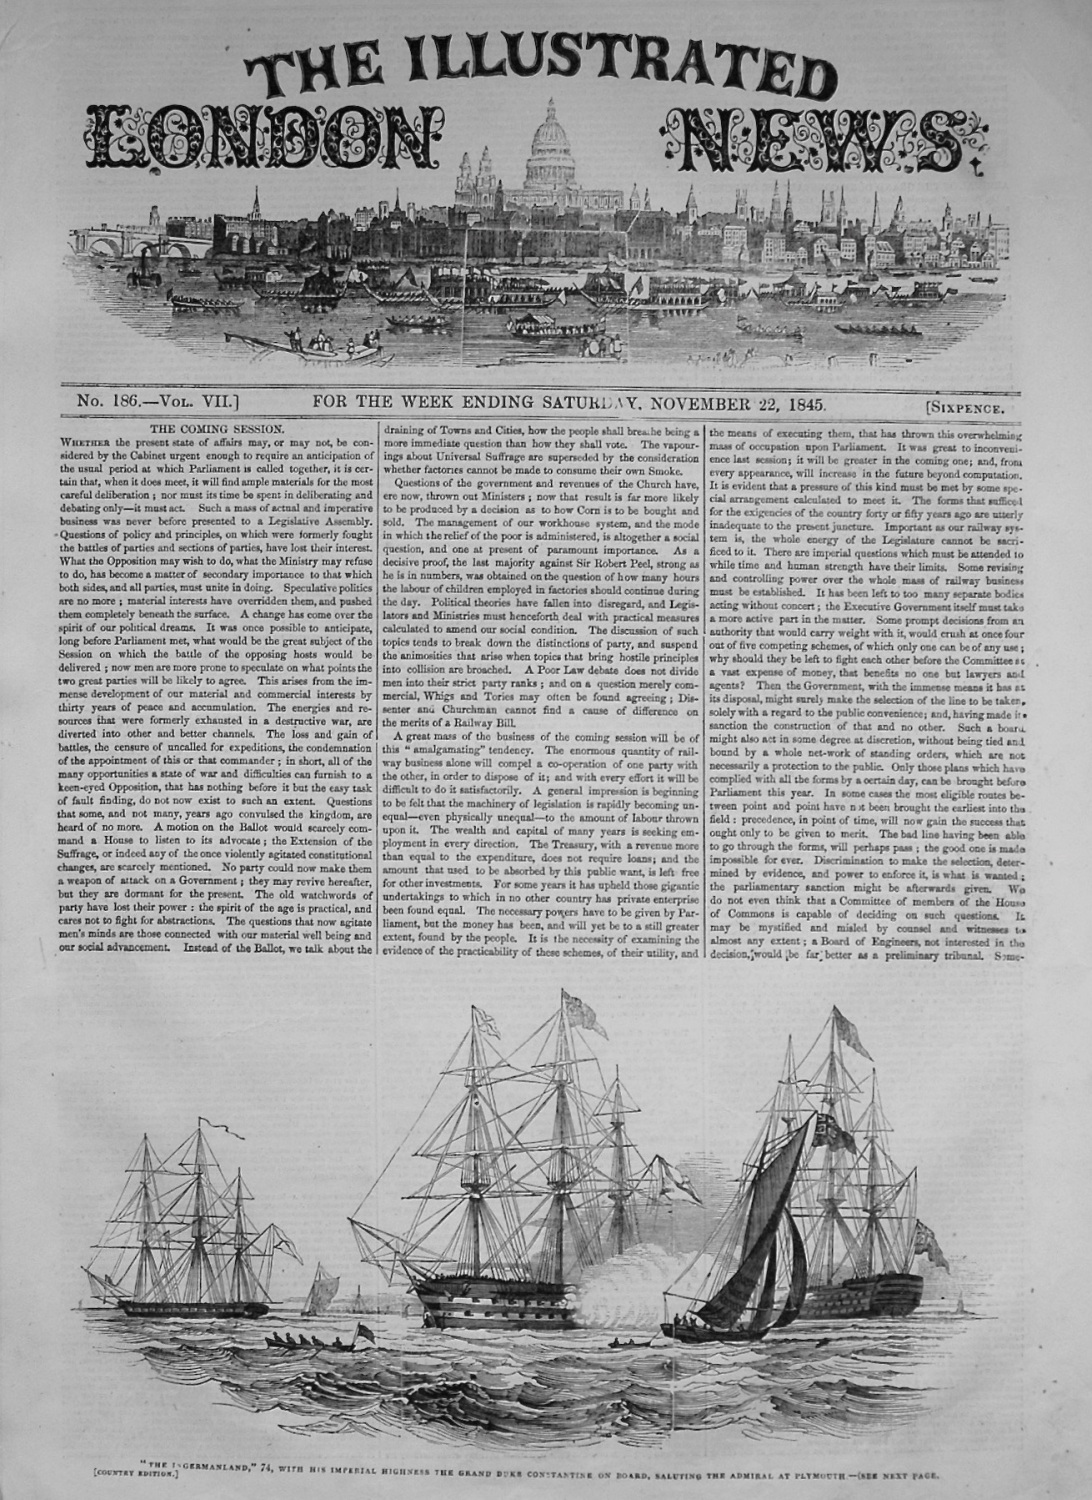 Illustrated London News. November 22nd, 1845.